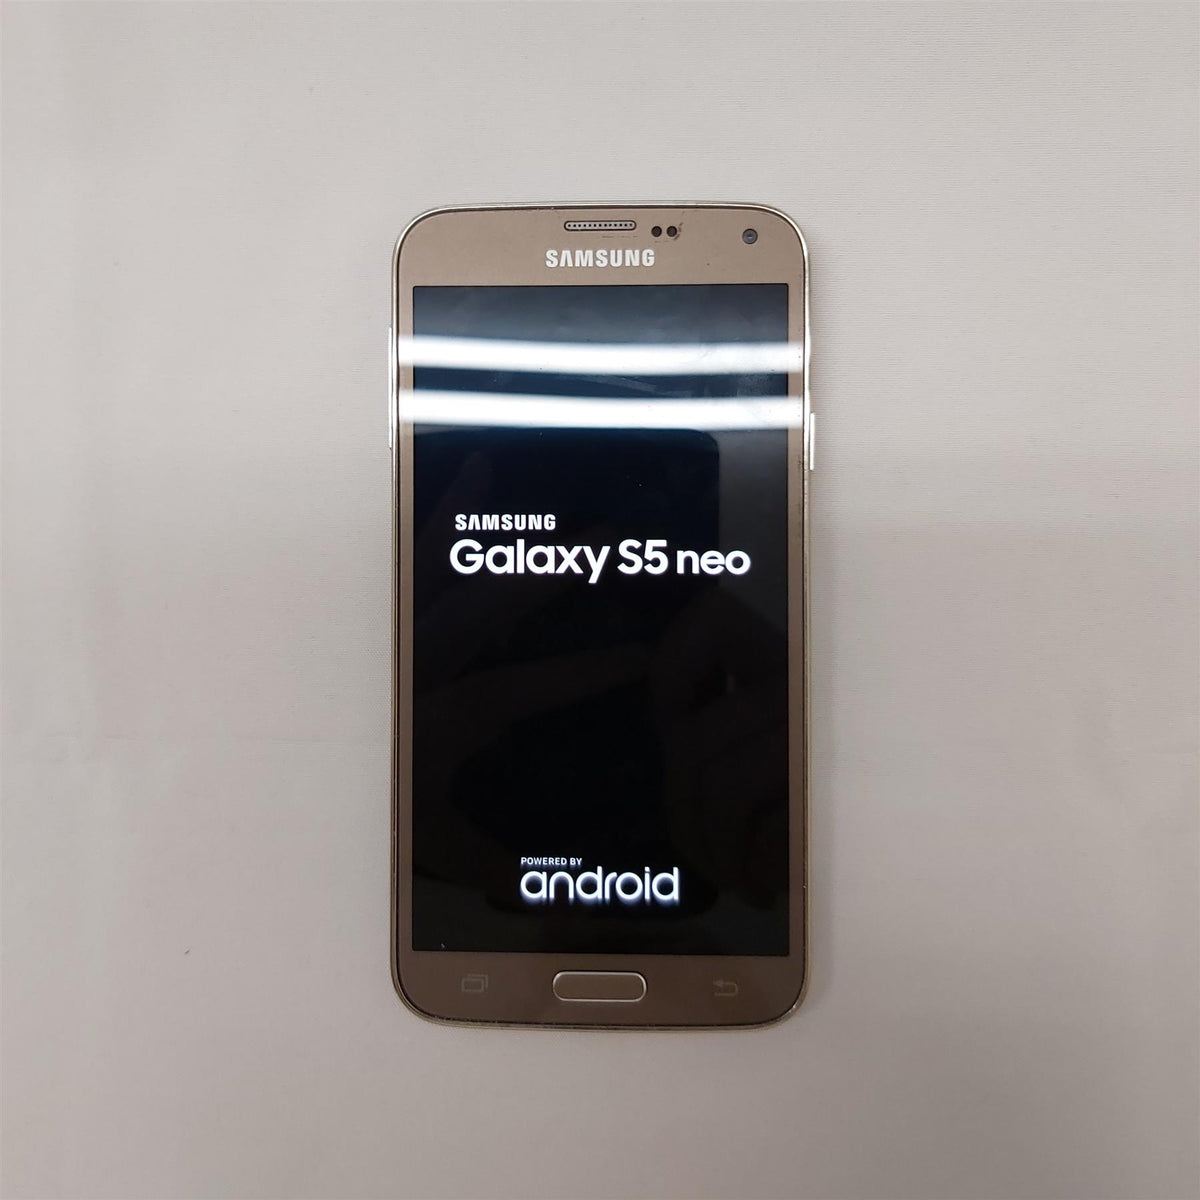 Samsung Galaxy S5 Neo - 16 GB - Silver - Good Condition - Unlocked